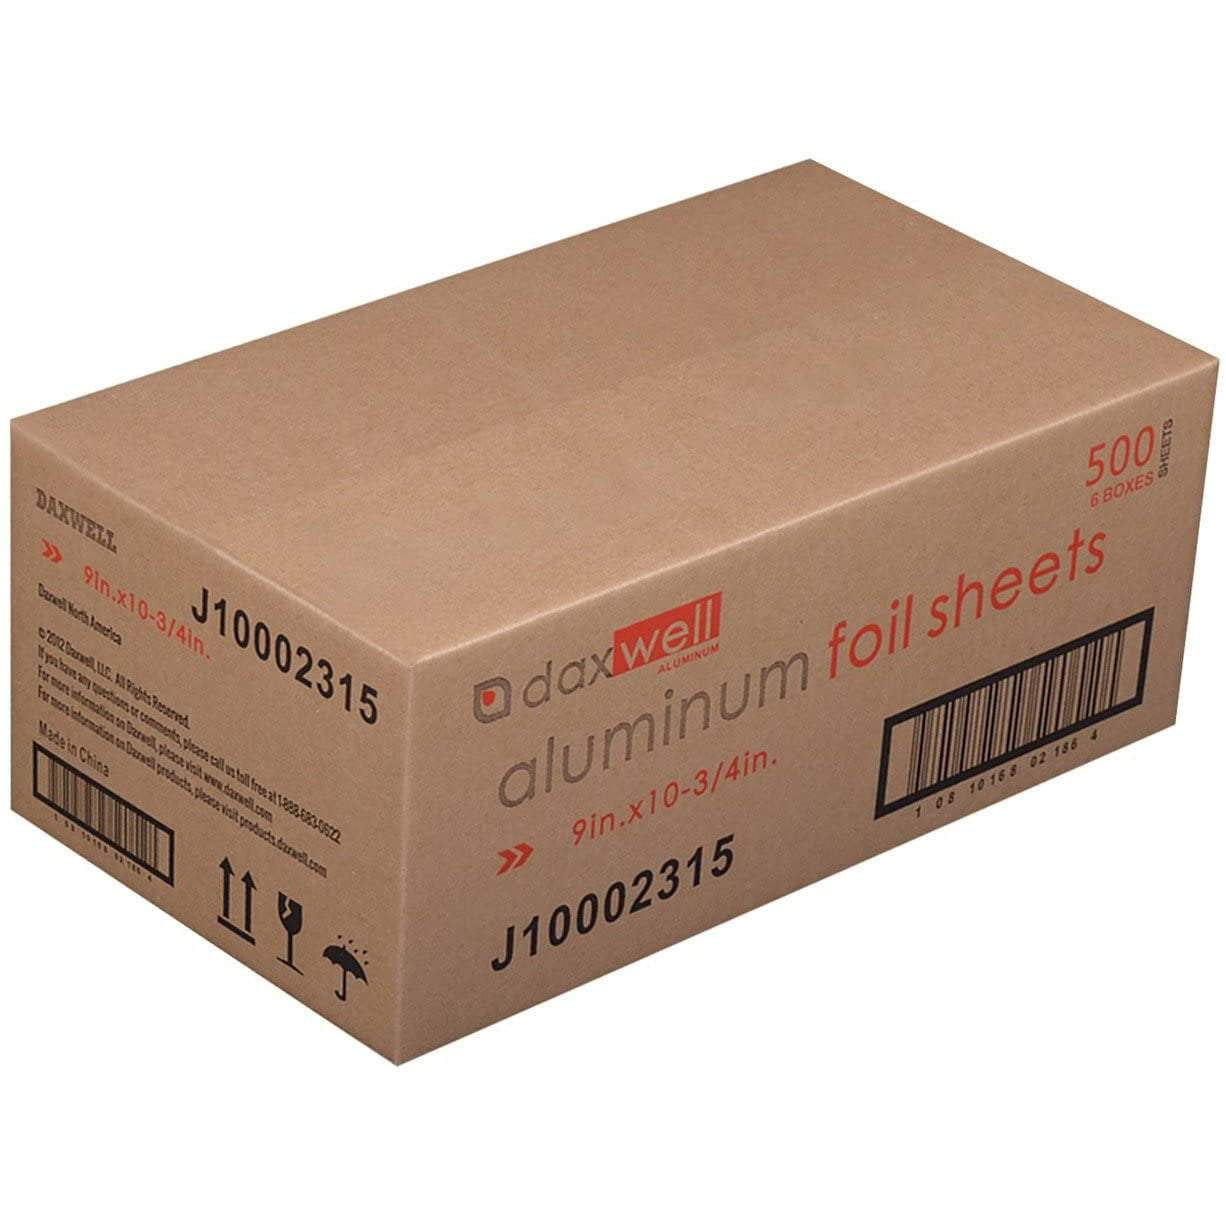 Durable Packaging Pop-Up Aluminum Foil Sheets, 12 x 10 3/4, 500/Box, 6 Boxes/Carton